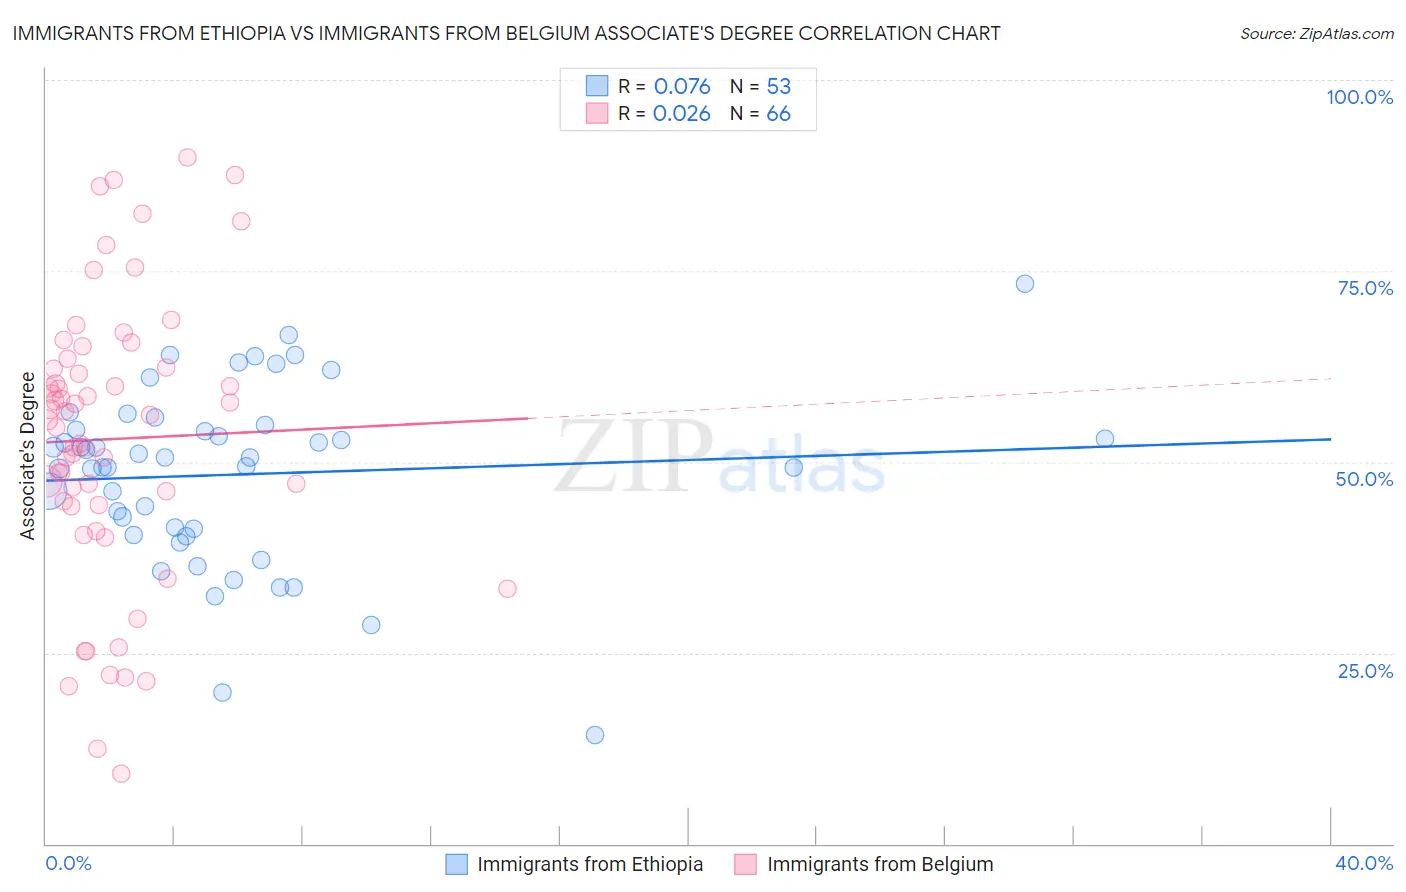 Immigrants from Ethiopia vs Immigrants from Belgium Associate's Degree